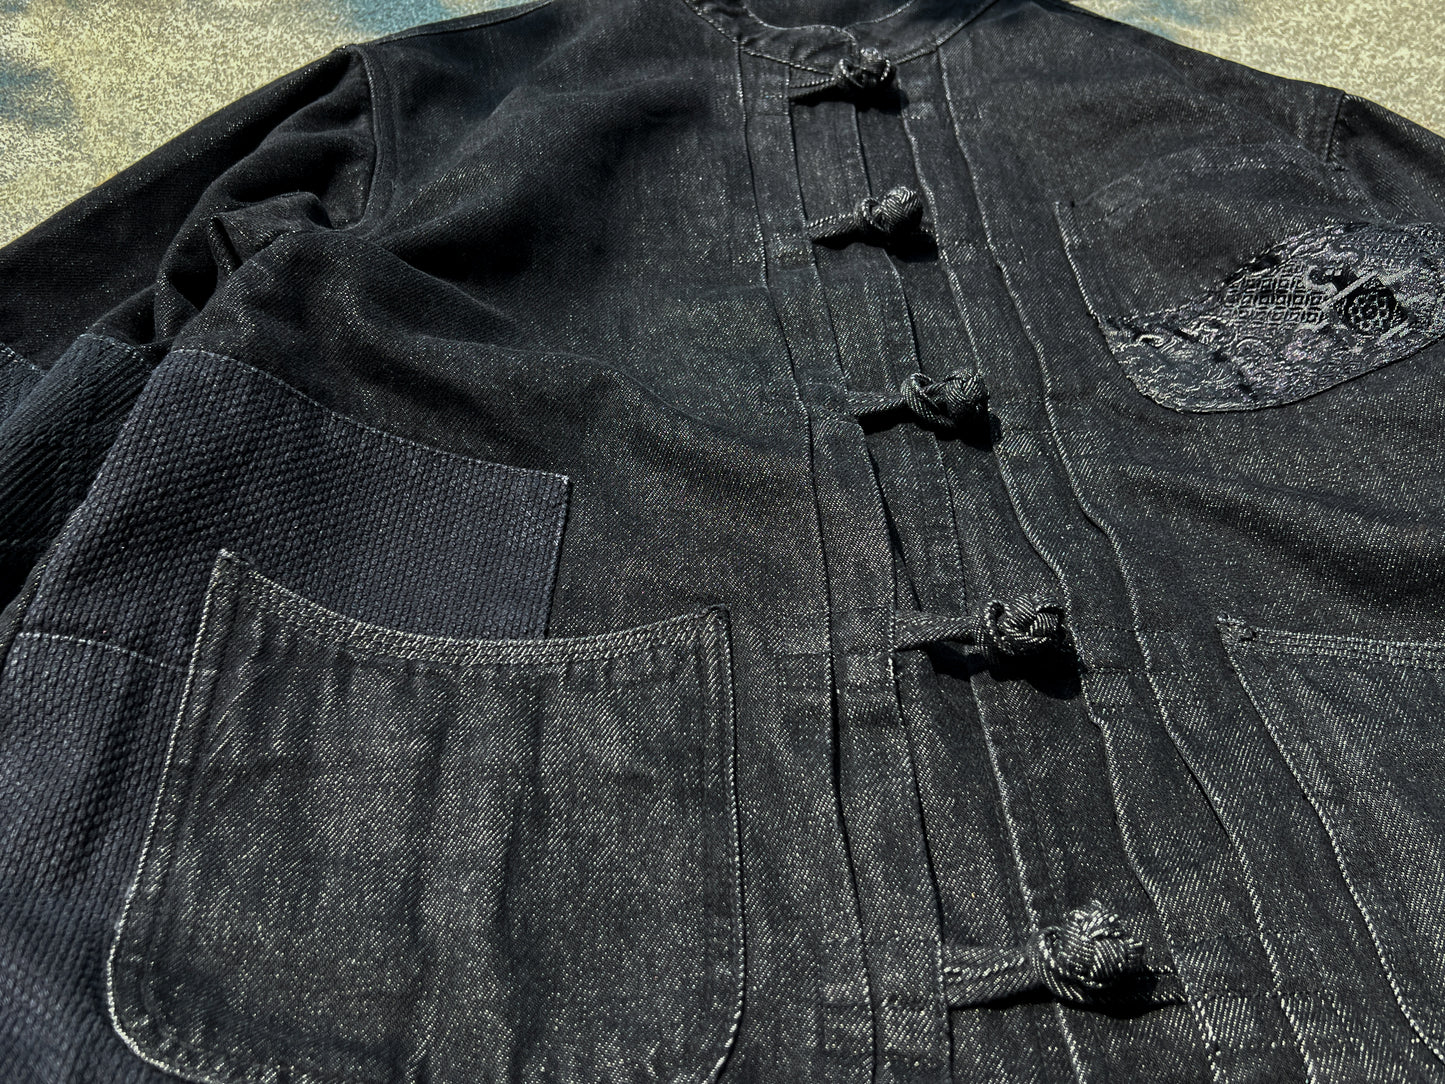 【Limited Edition】限定款 Dragon Embroidery Black Denim KF Jacket【撥雲】